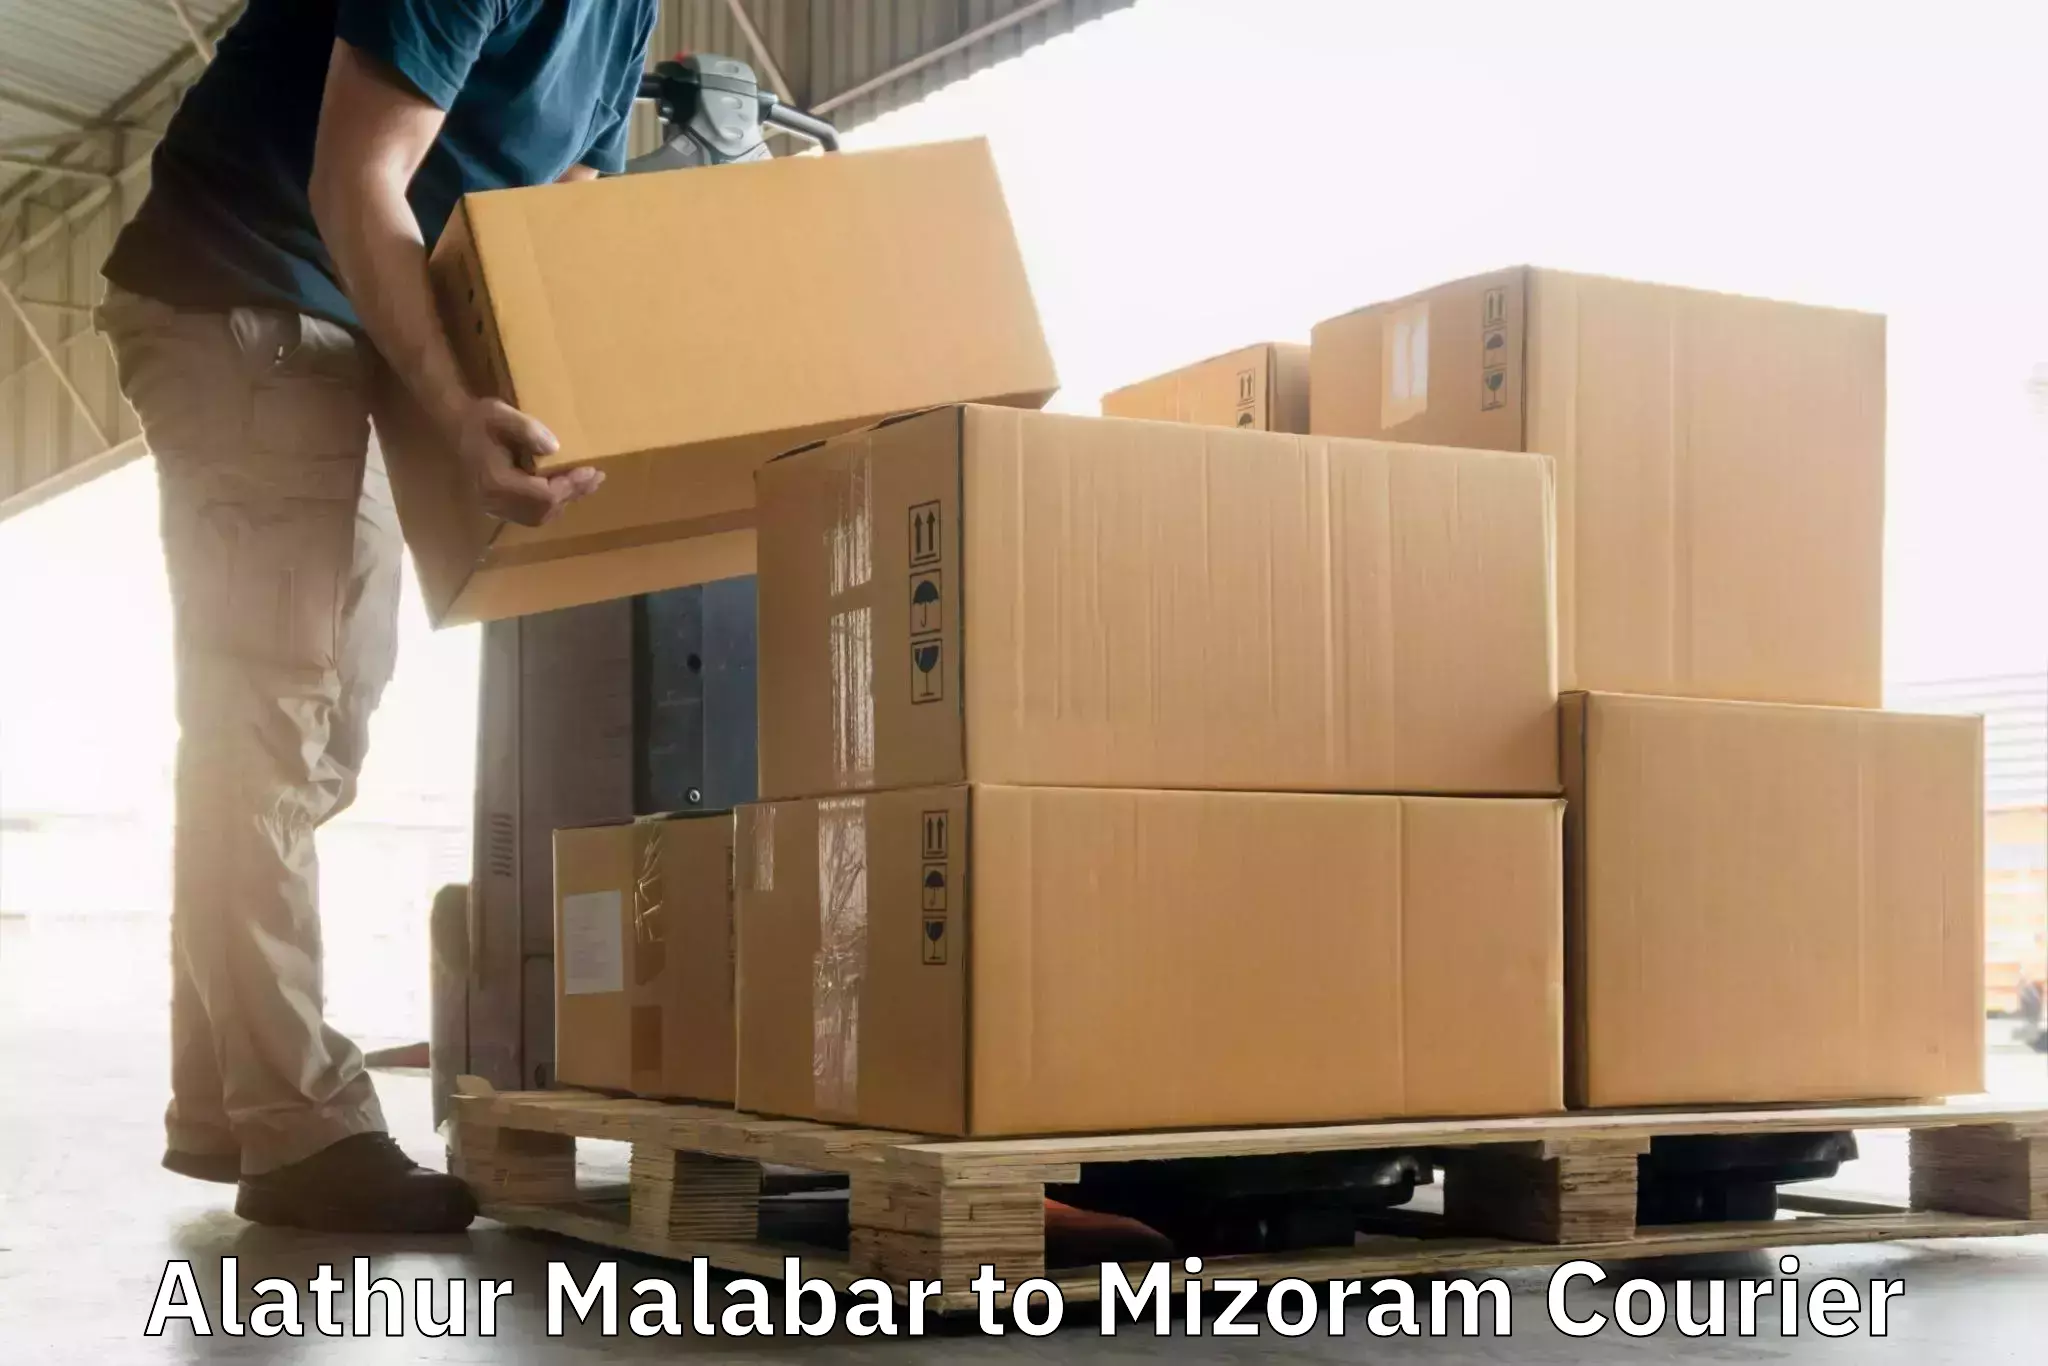 Modern delivery technologies Alathur Malabar to Aizawl